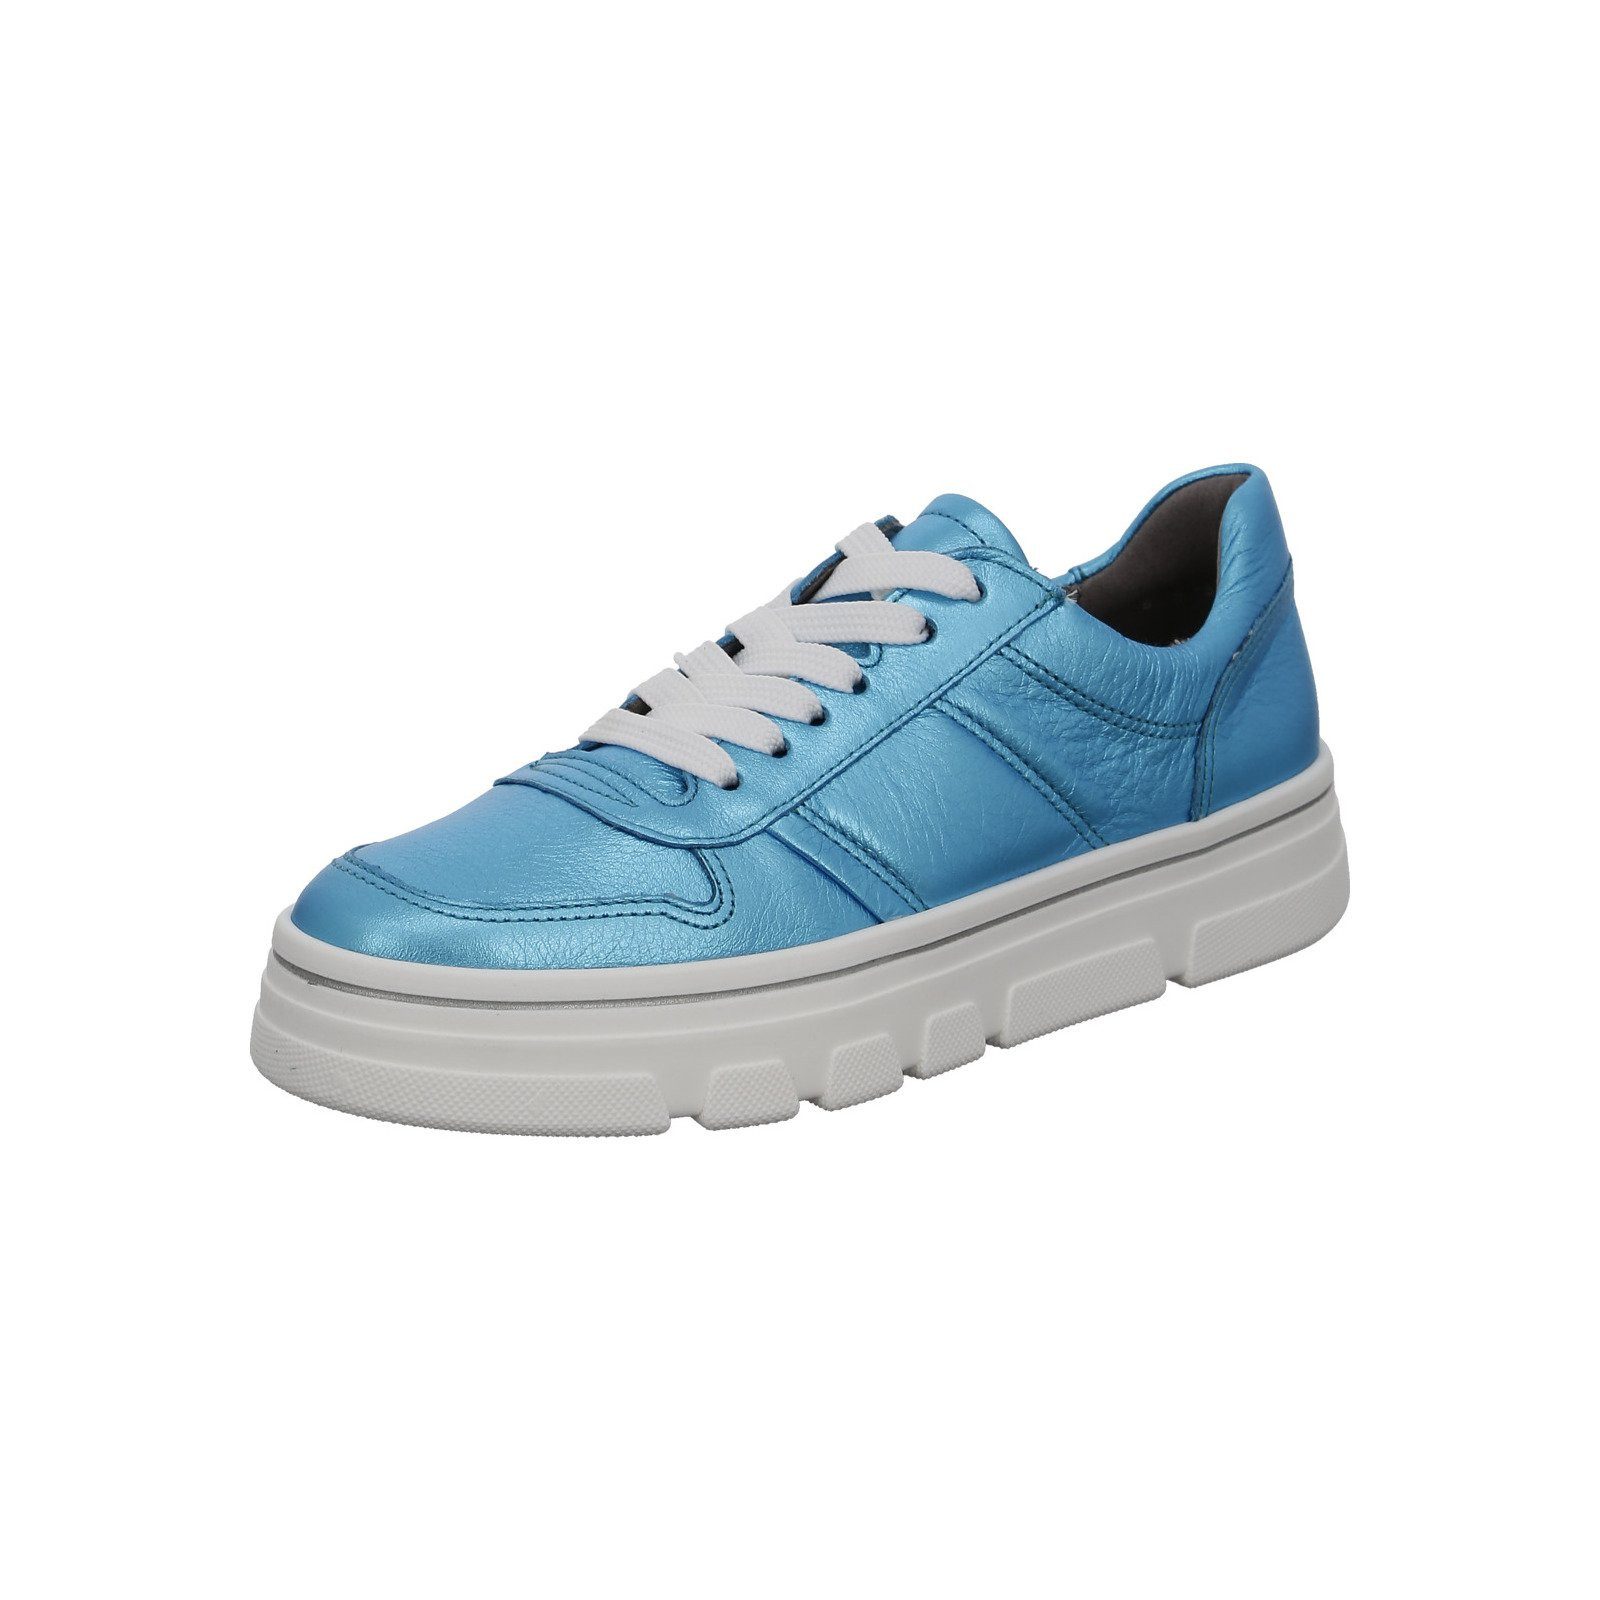 Ara Canberra - Damen Schuhe Sneaker Schnürer Glattleder blau